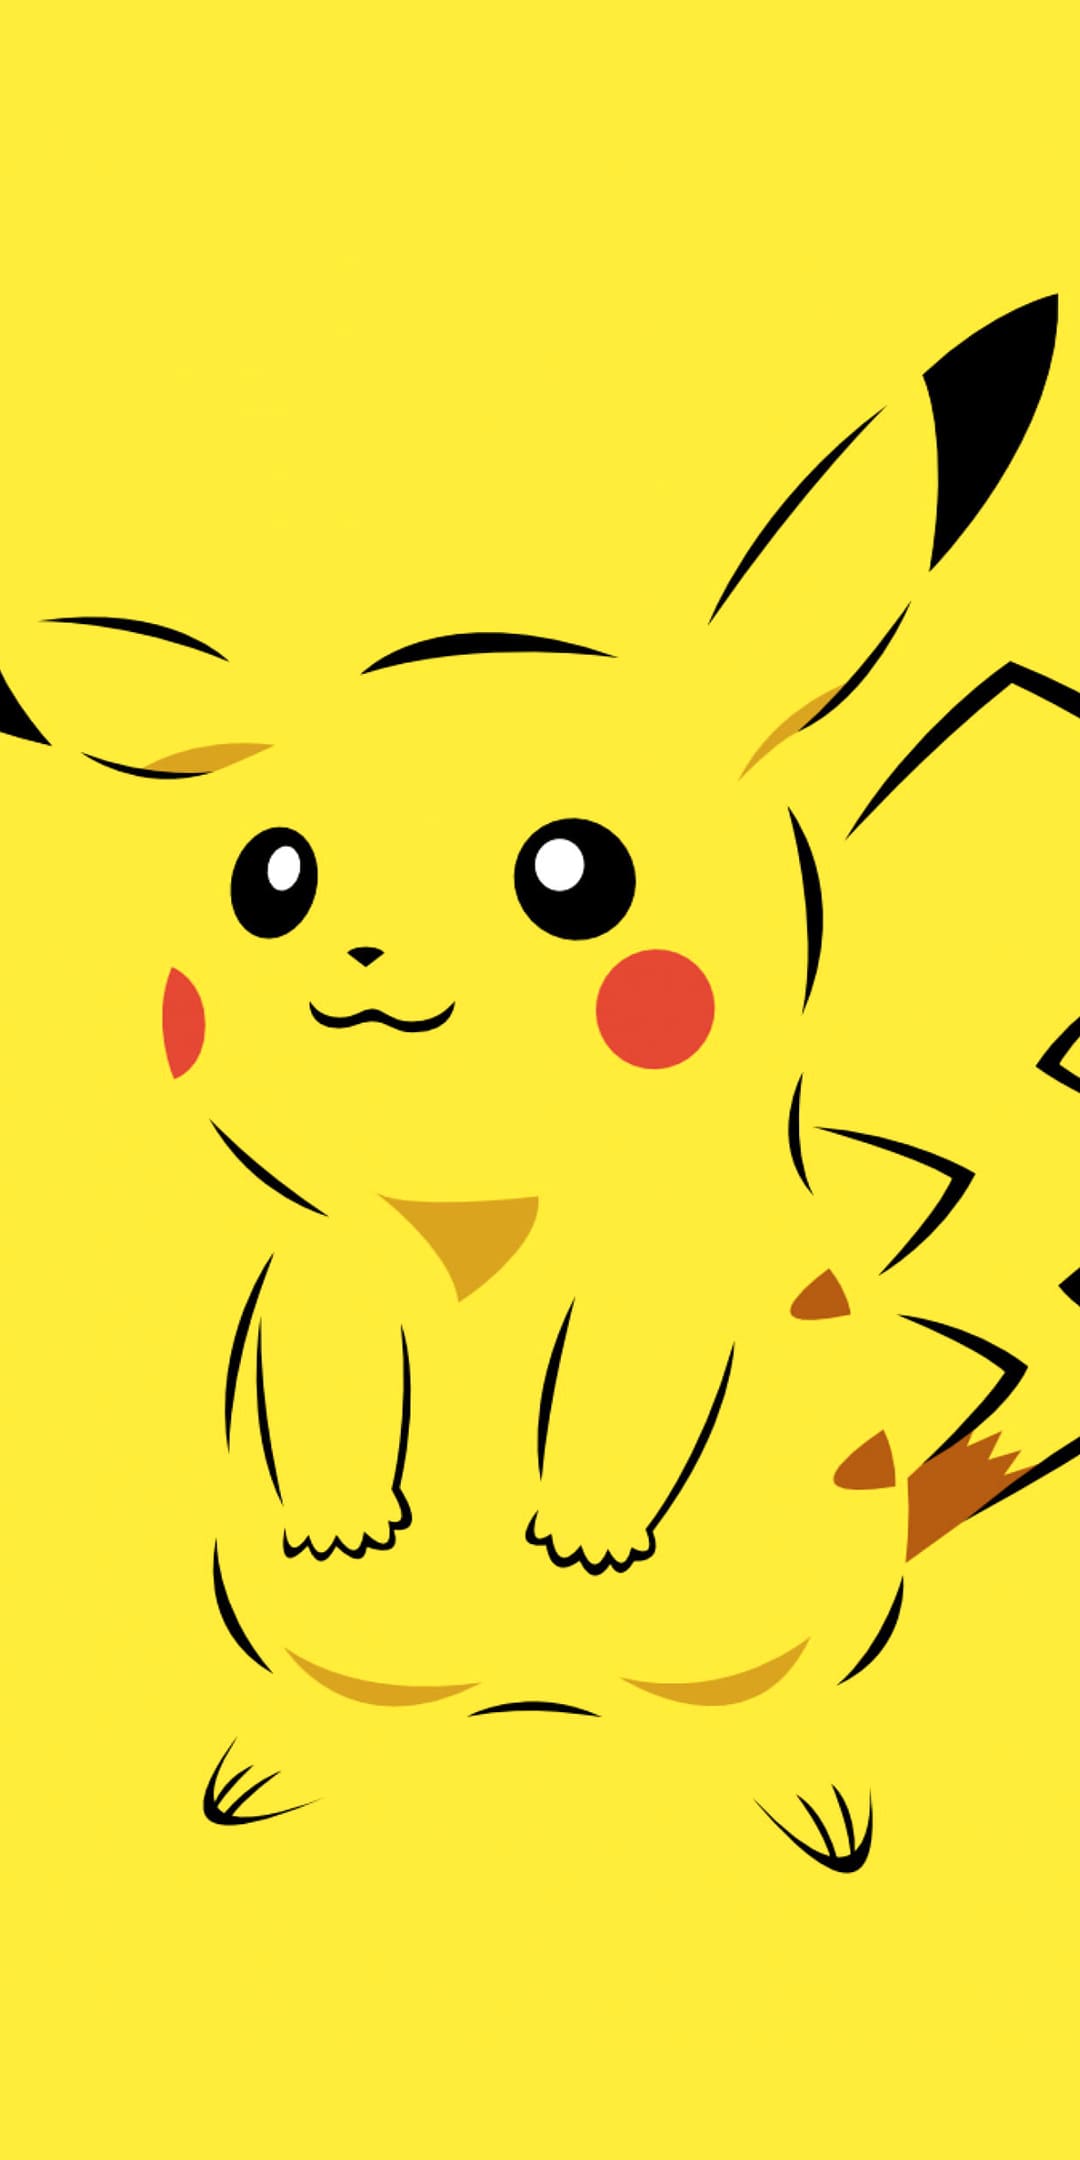 Pikachu Wallpapers